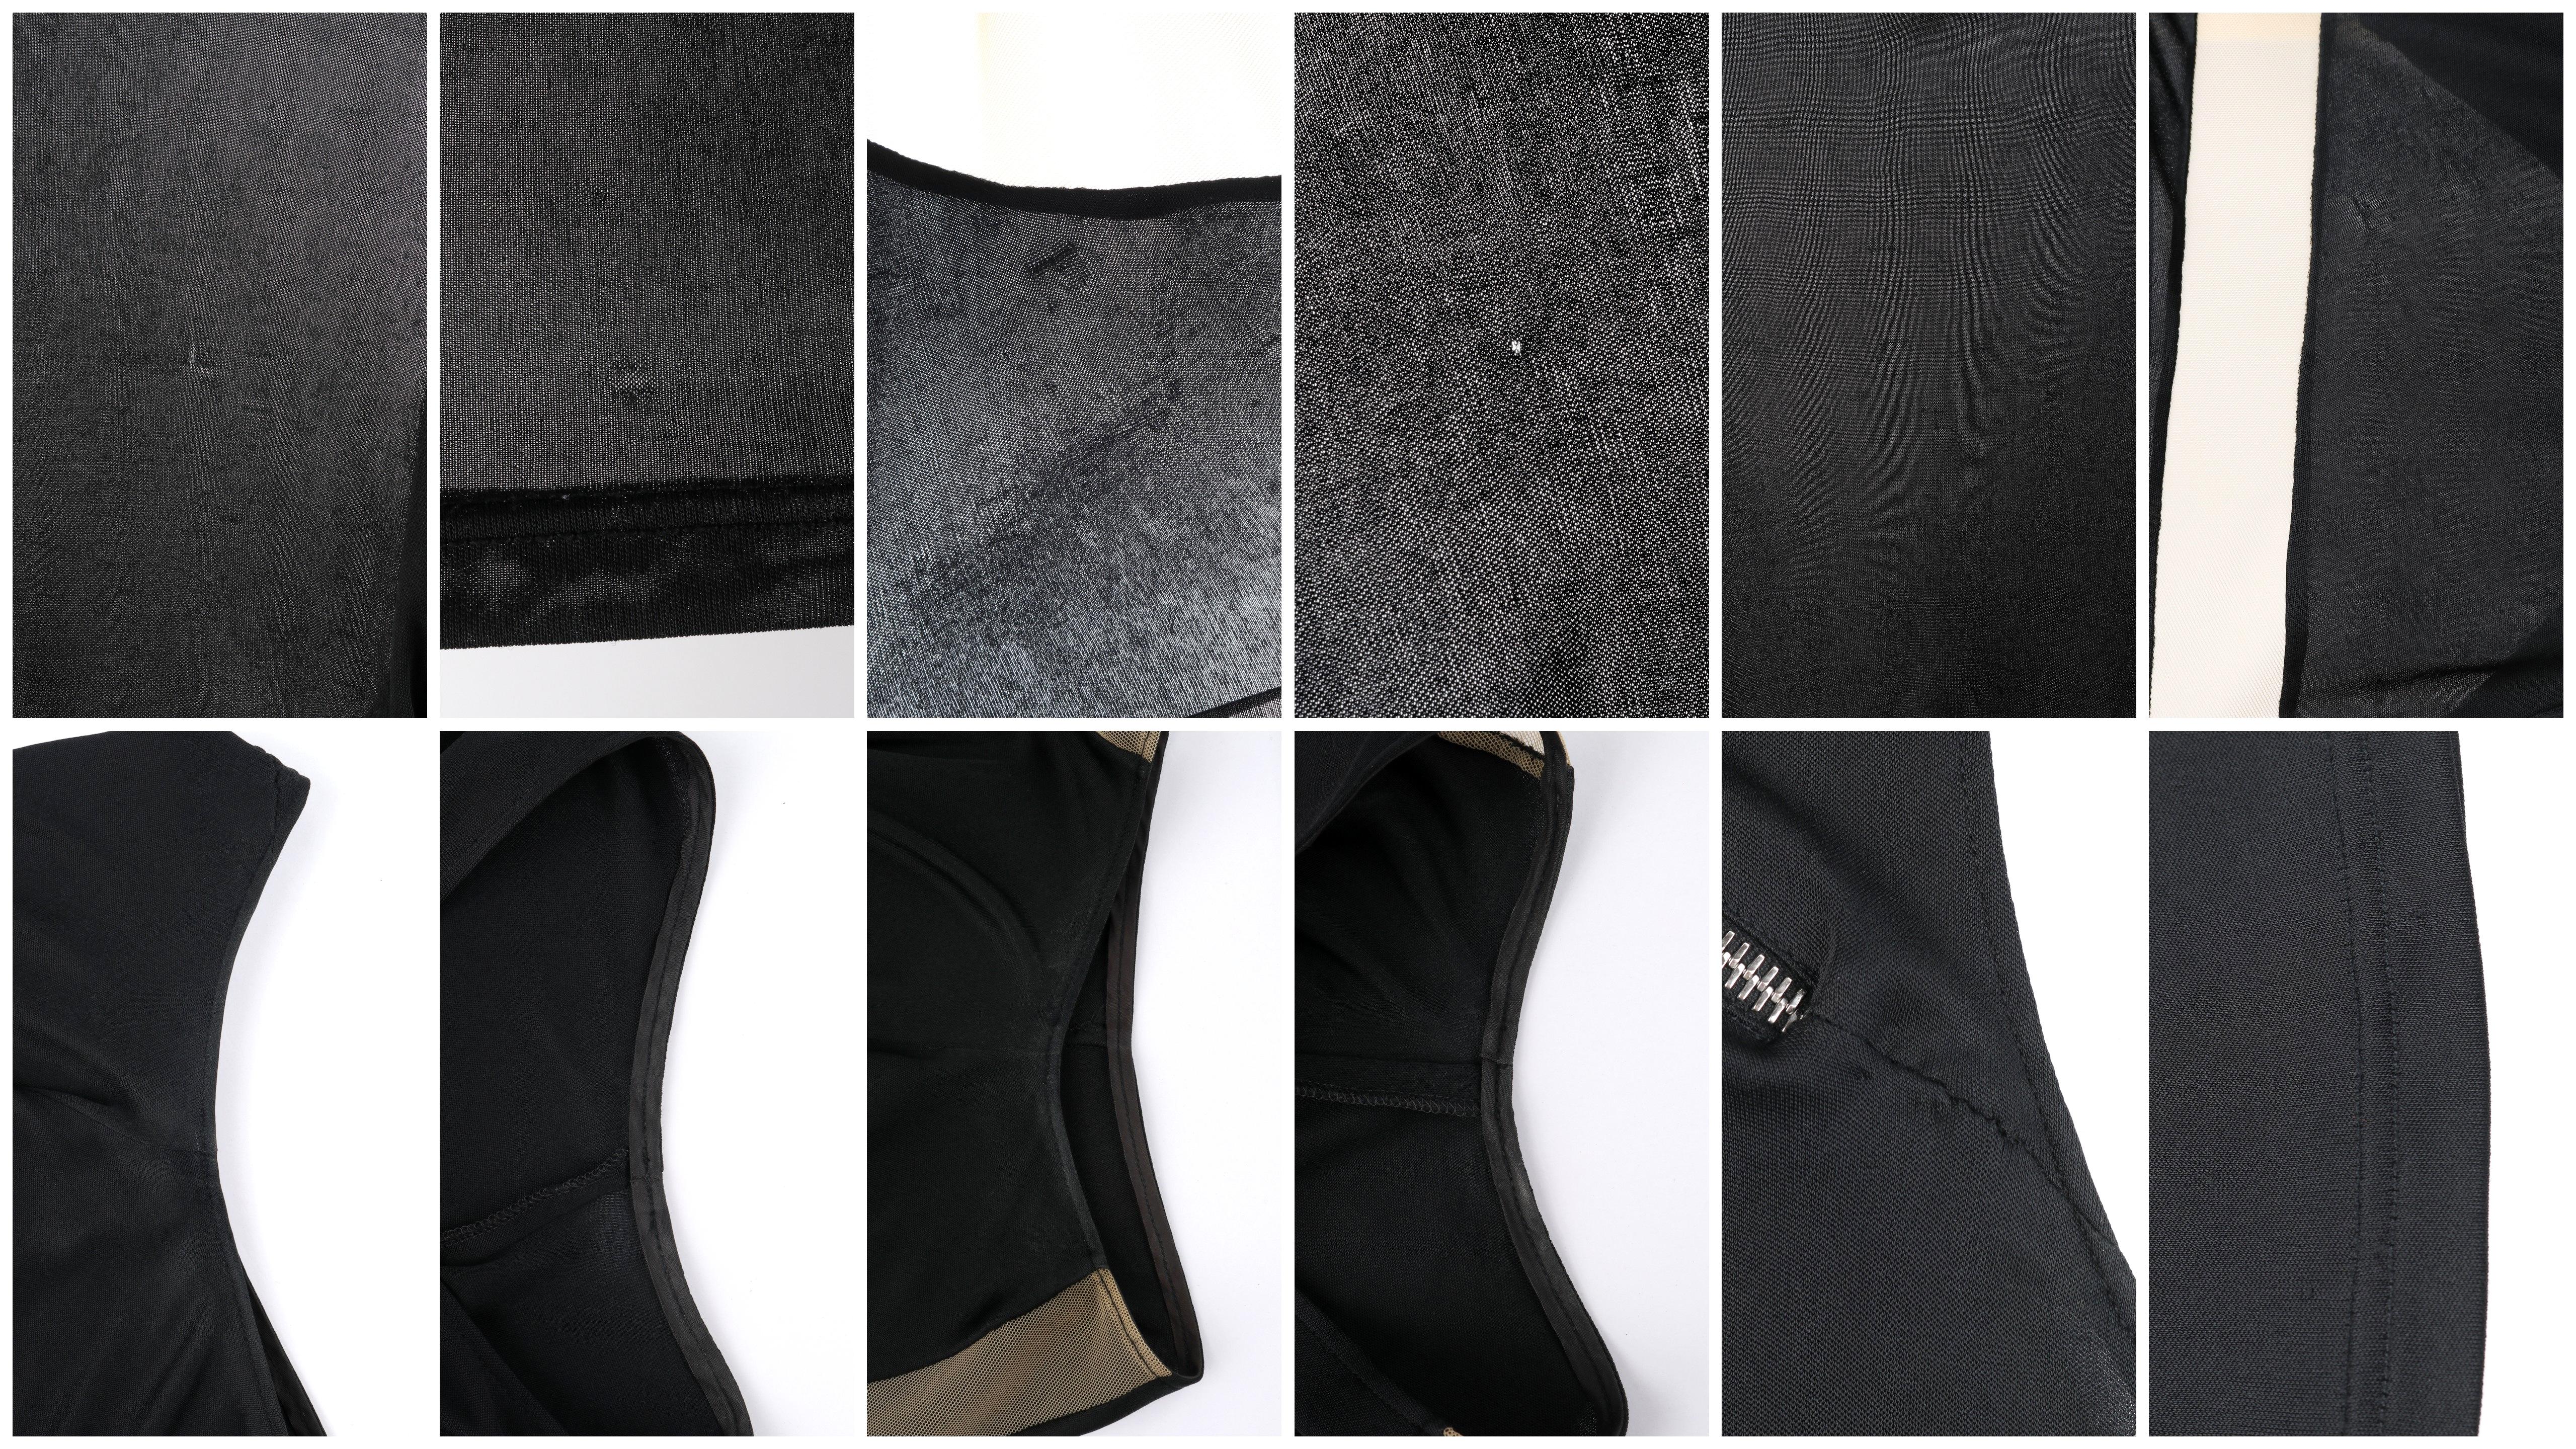 ALEXANDER McQUEEN S/S 1997 “La Poupée” Black Tan Asymmetric Mesh Zipper Tank Top For Sale 2